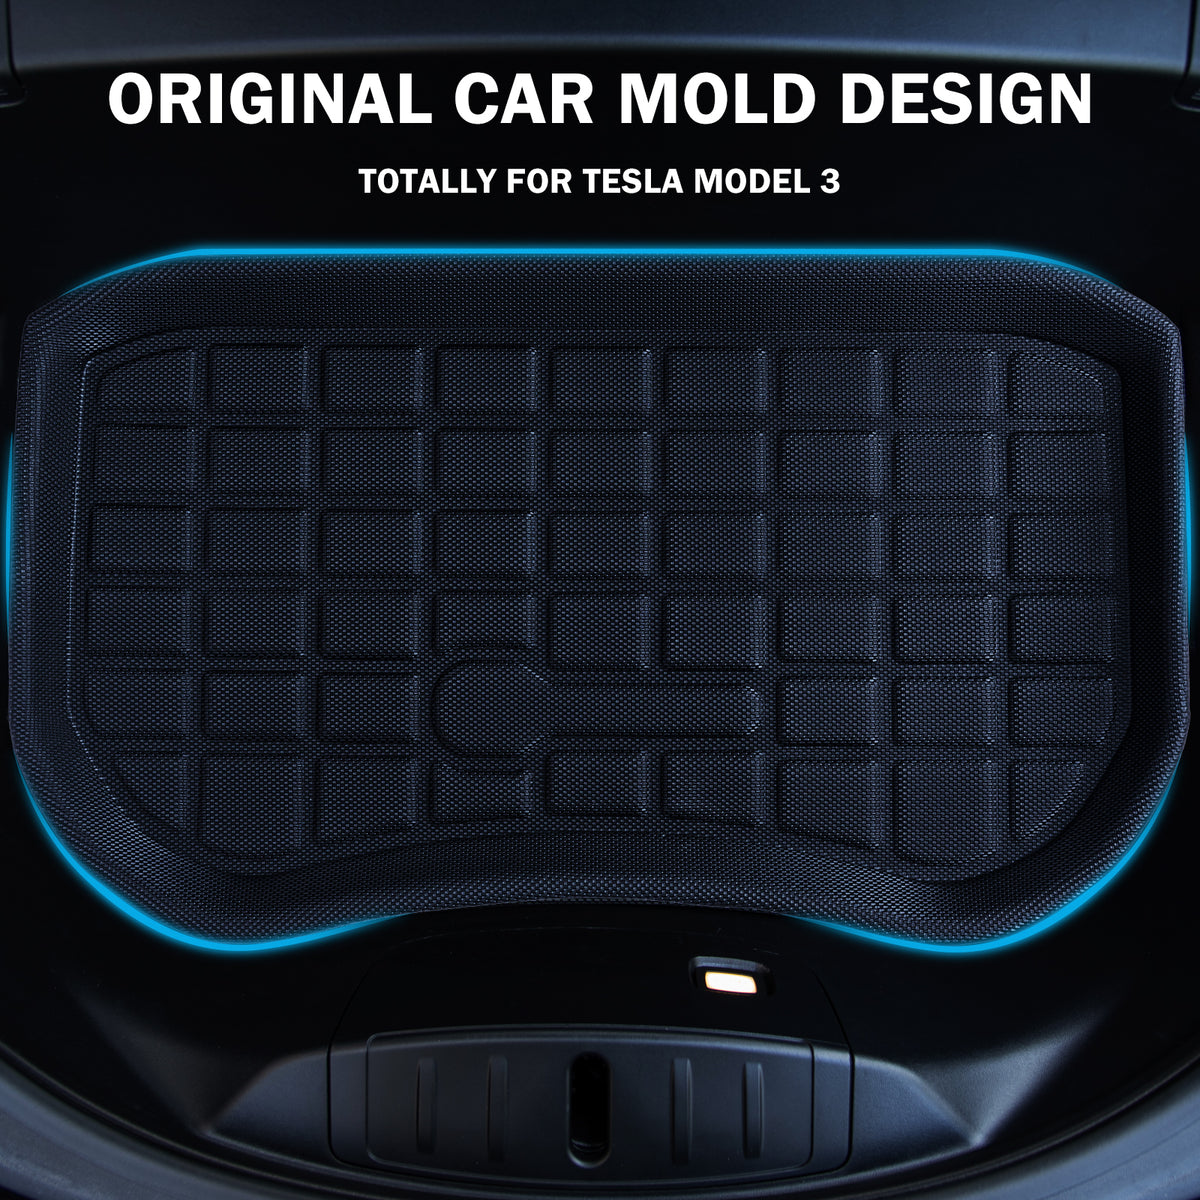 Turoaz Right-Hand Drive Floor Mats For 2021up Tesla Model 3 , Trunk Mats Interior Accessories (Set of 6)